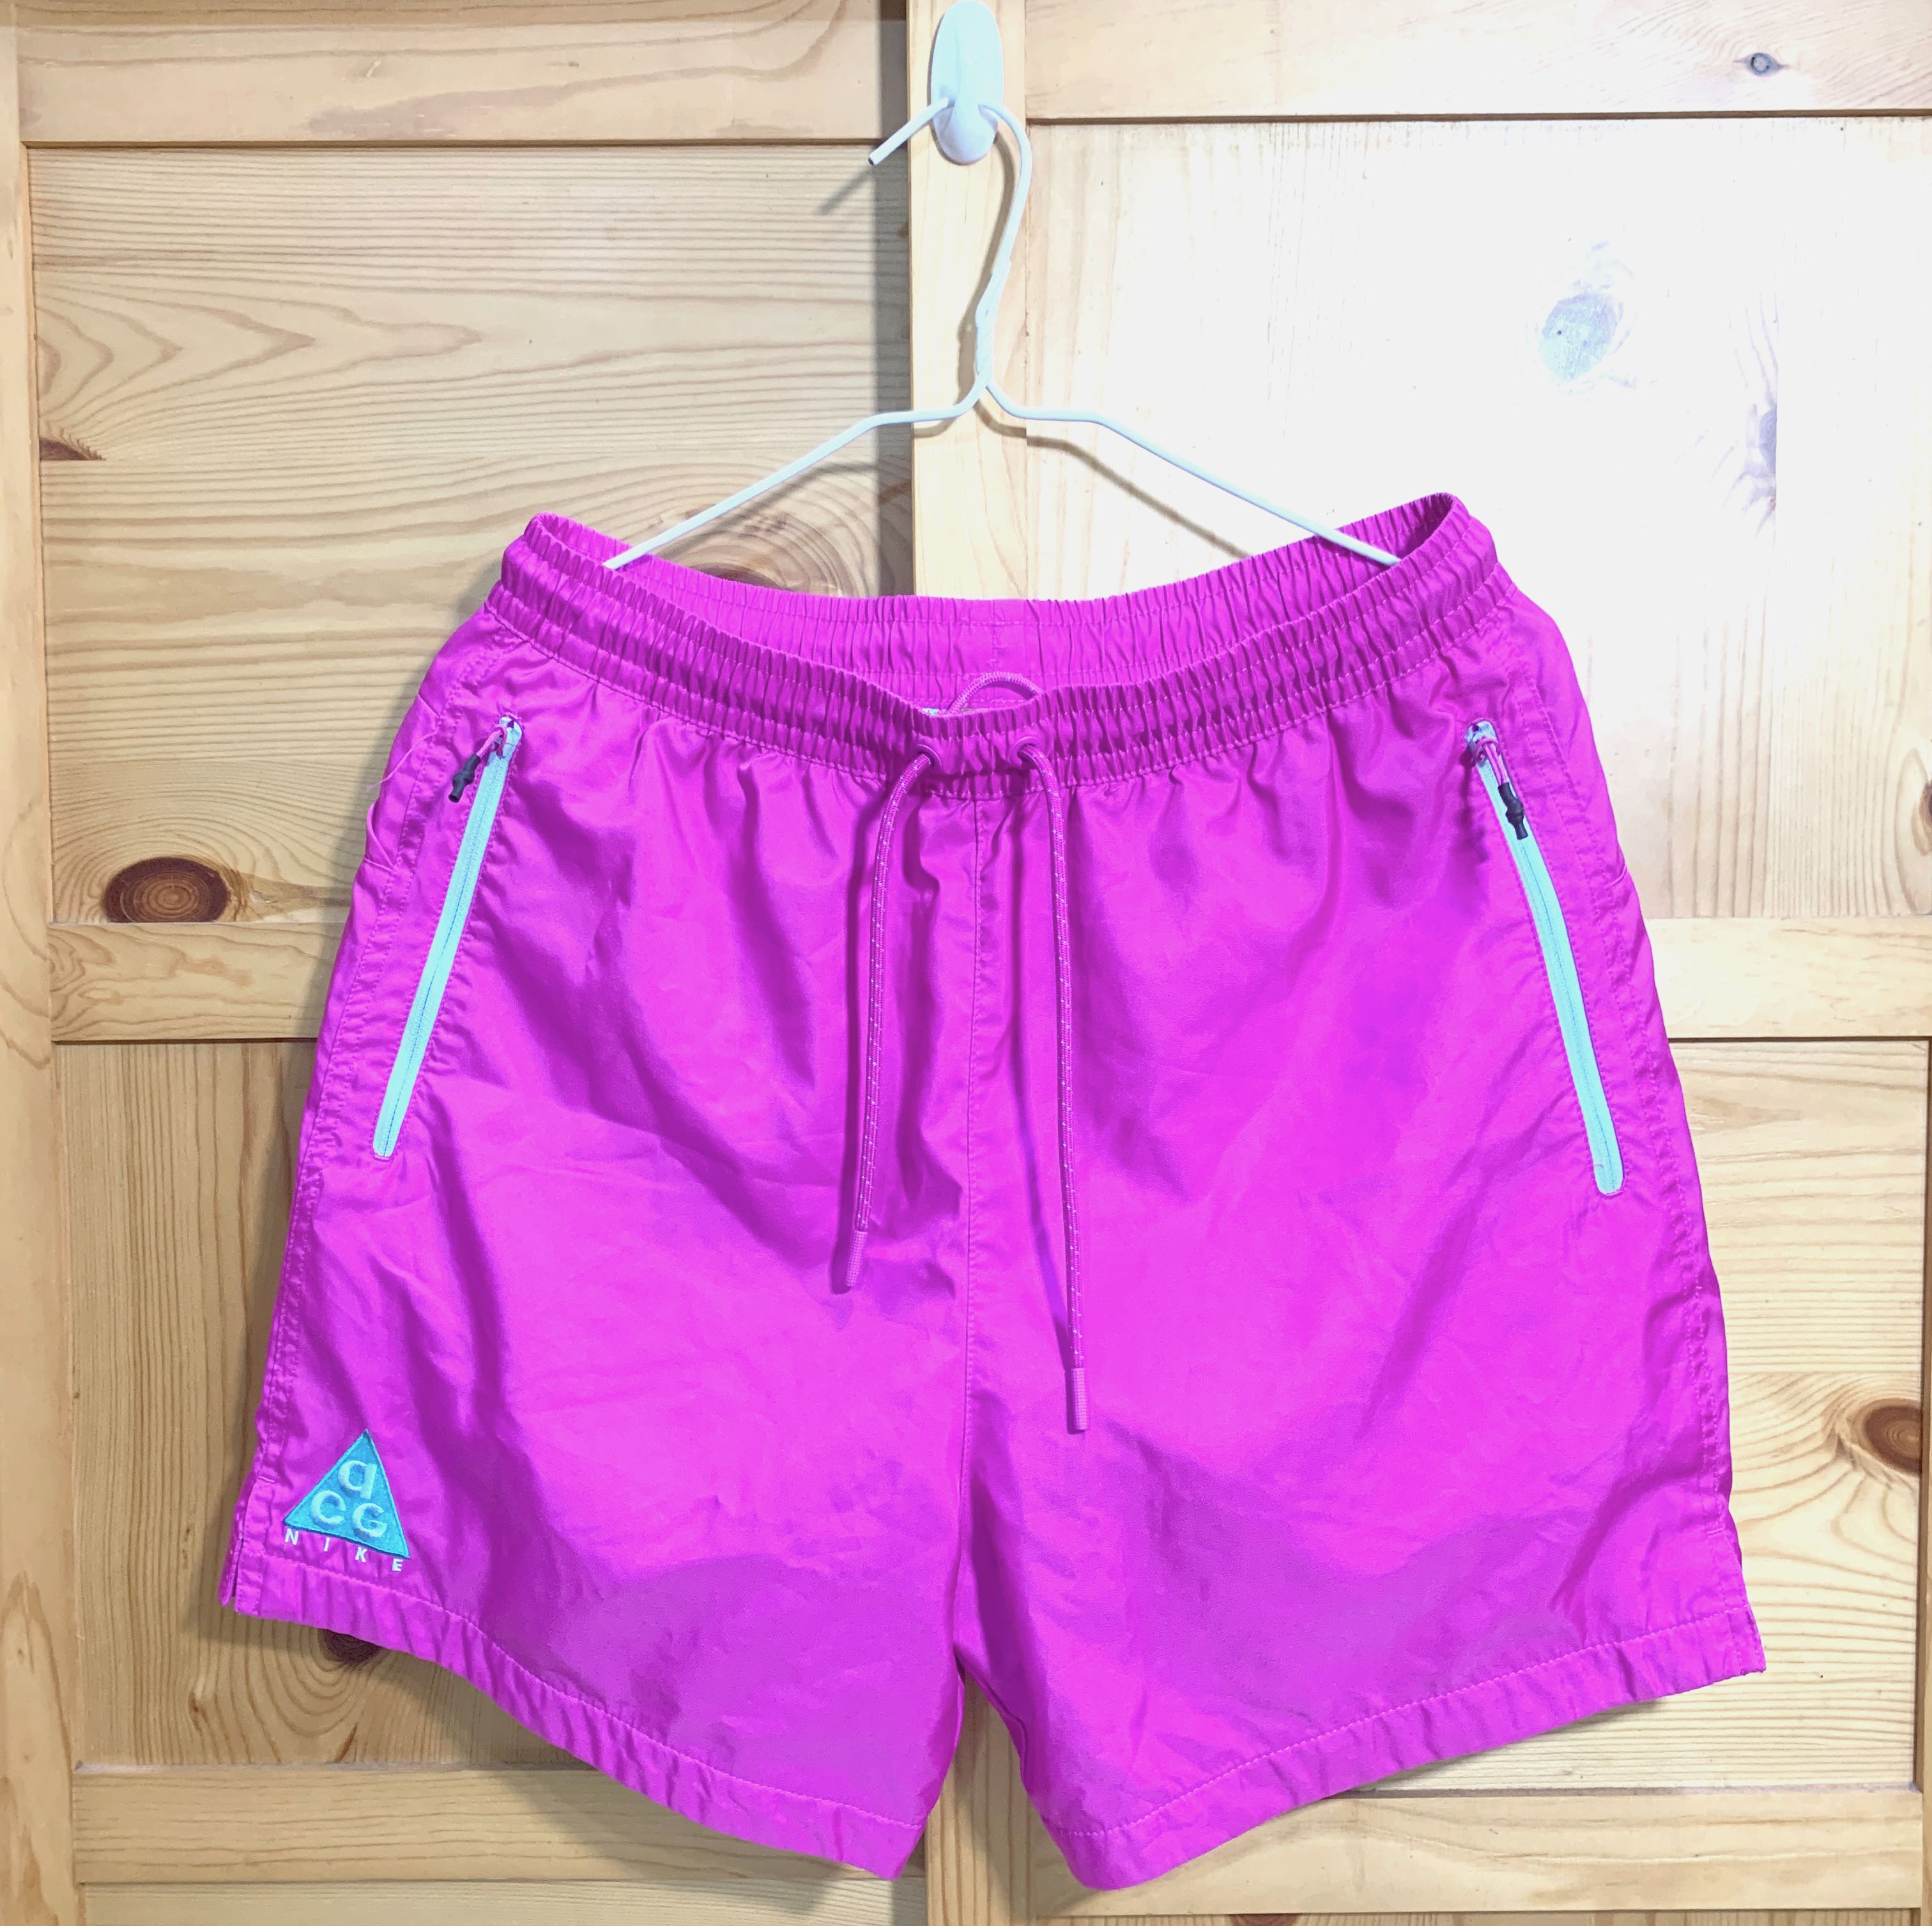 acg shorts pink